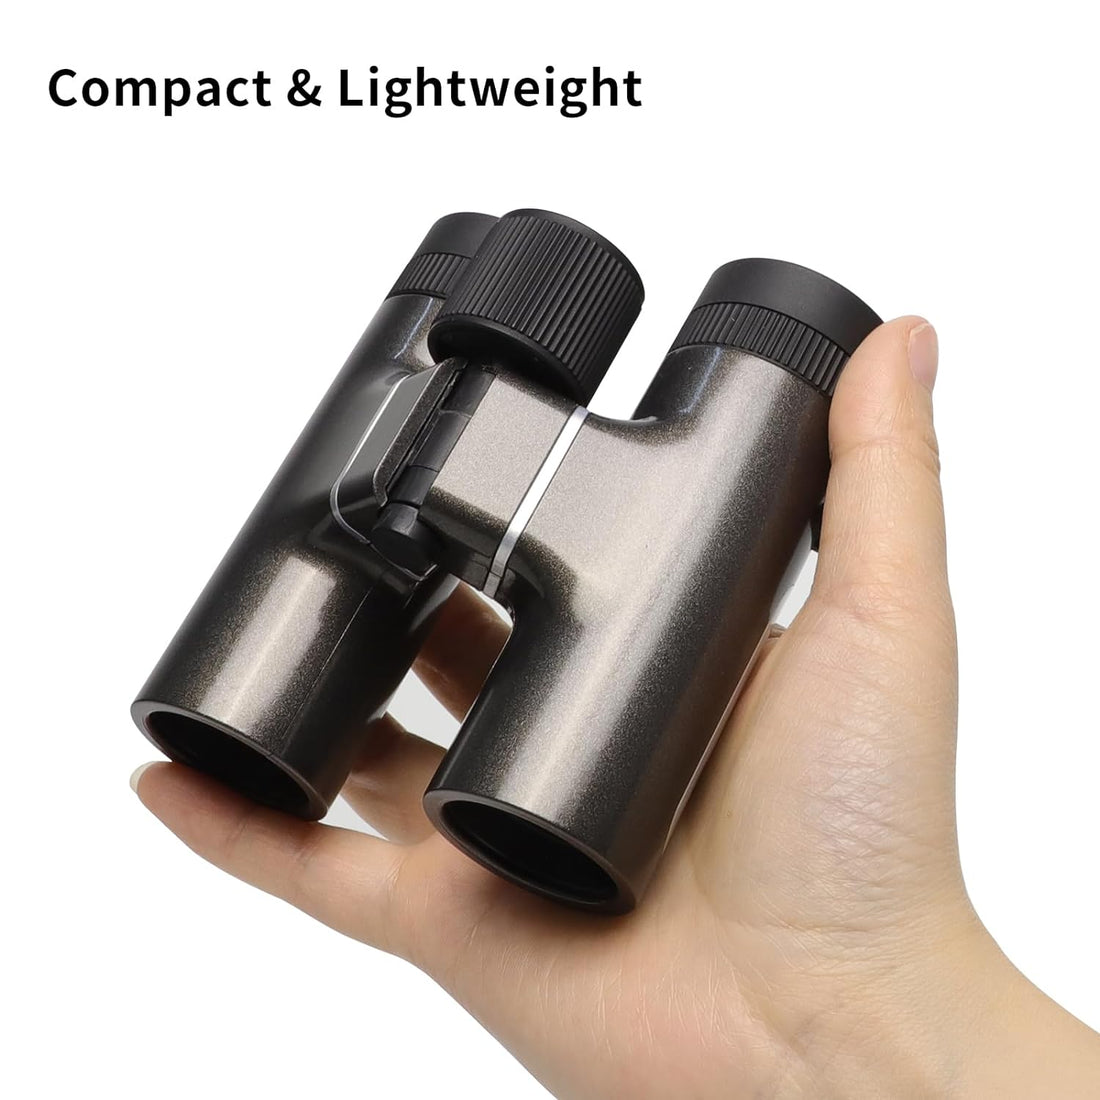 Small Compact Binoculars for Adults and Kids, 8x21 Lightweight Mini Foldable Binoculars, Pocket Binoculars for Bird Watching, Sightseeing, Travel, Hiking, Opera Concerts, Football Games(Black)